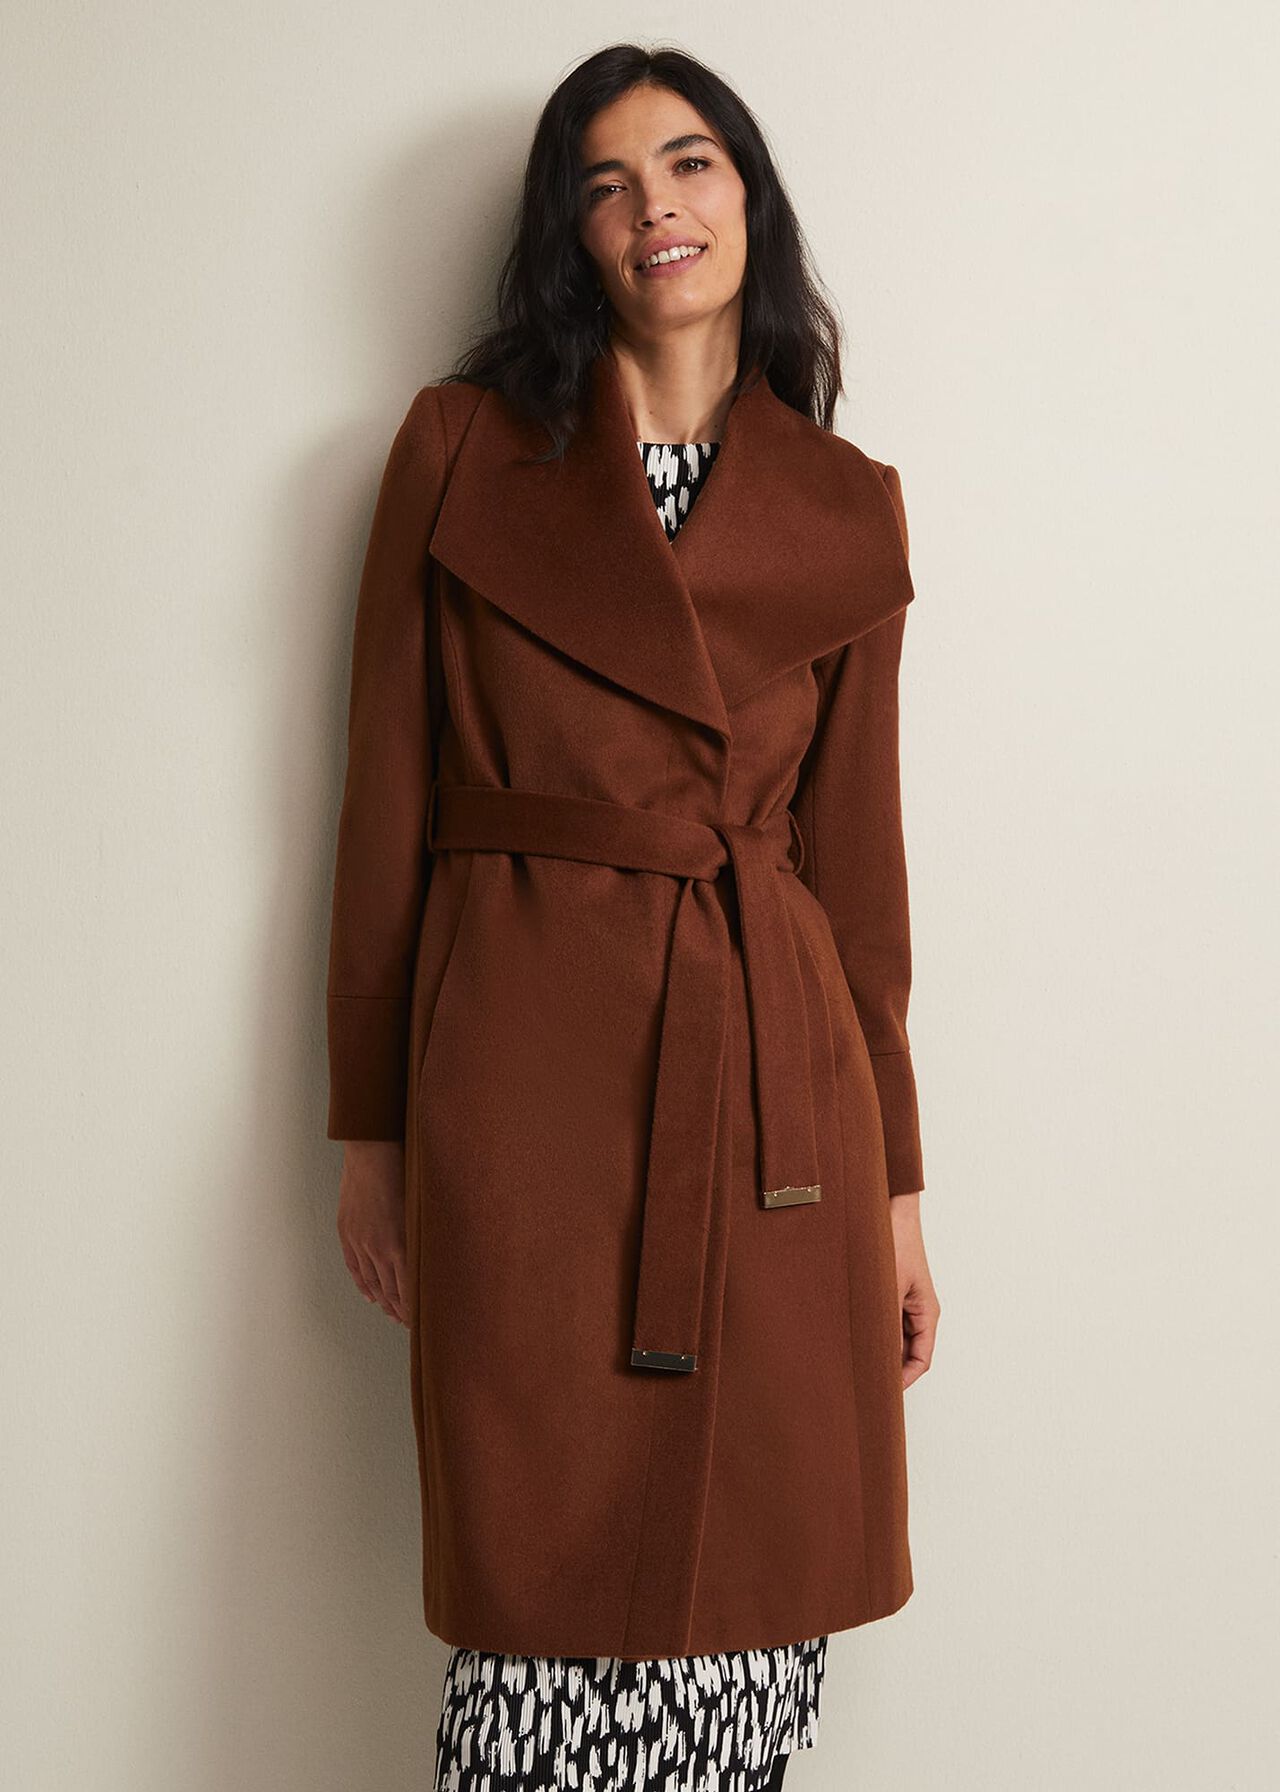 Nicci Tan Wool Smart Coat